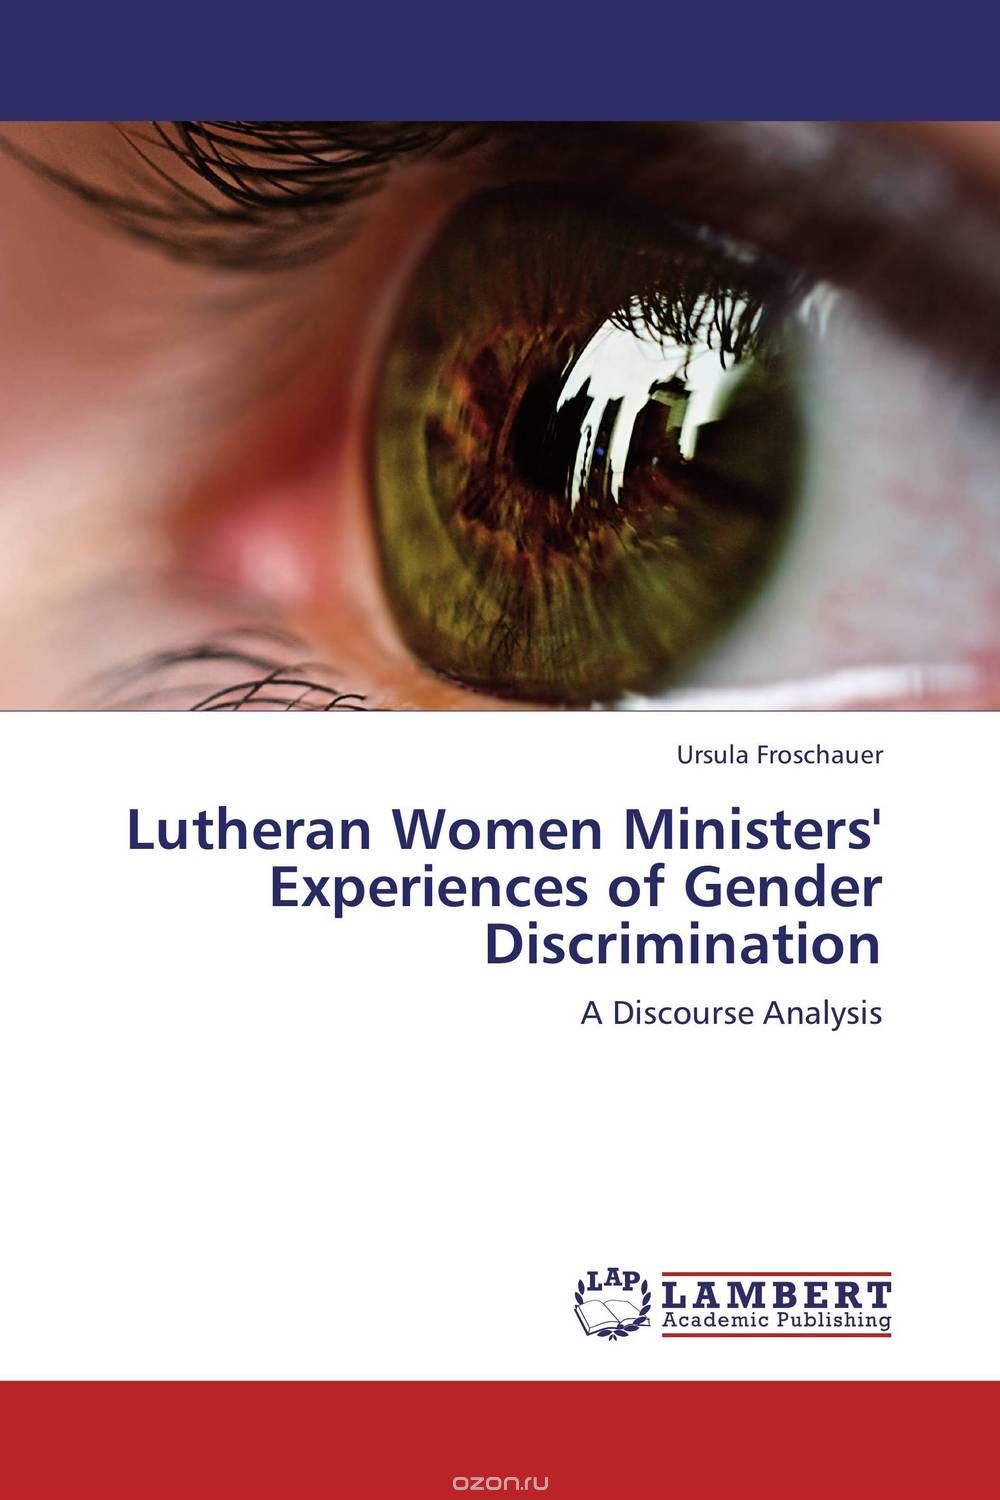 Скачать книгу "Lutheran Women Ministers' Experiences of Gender Discrimination"